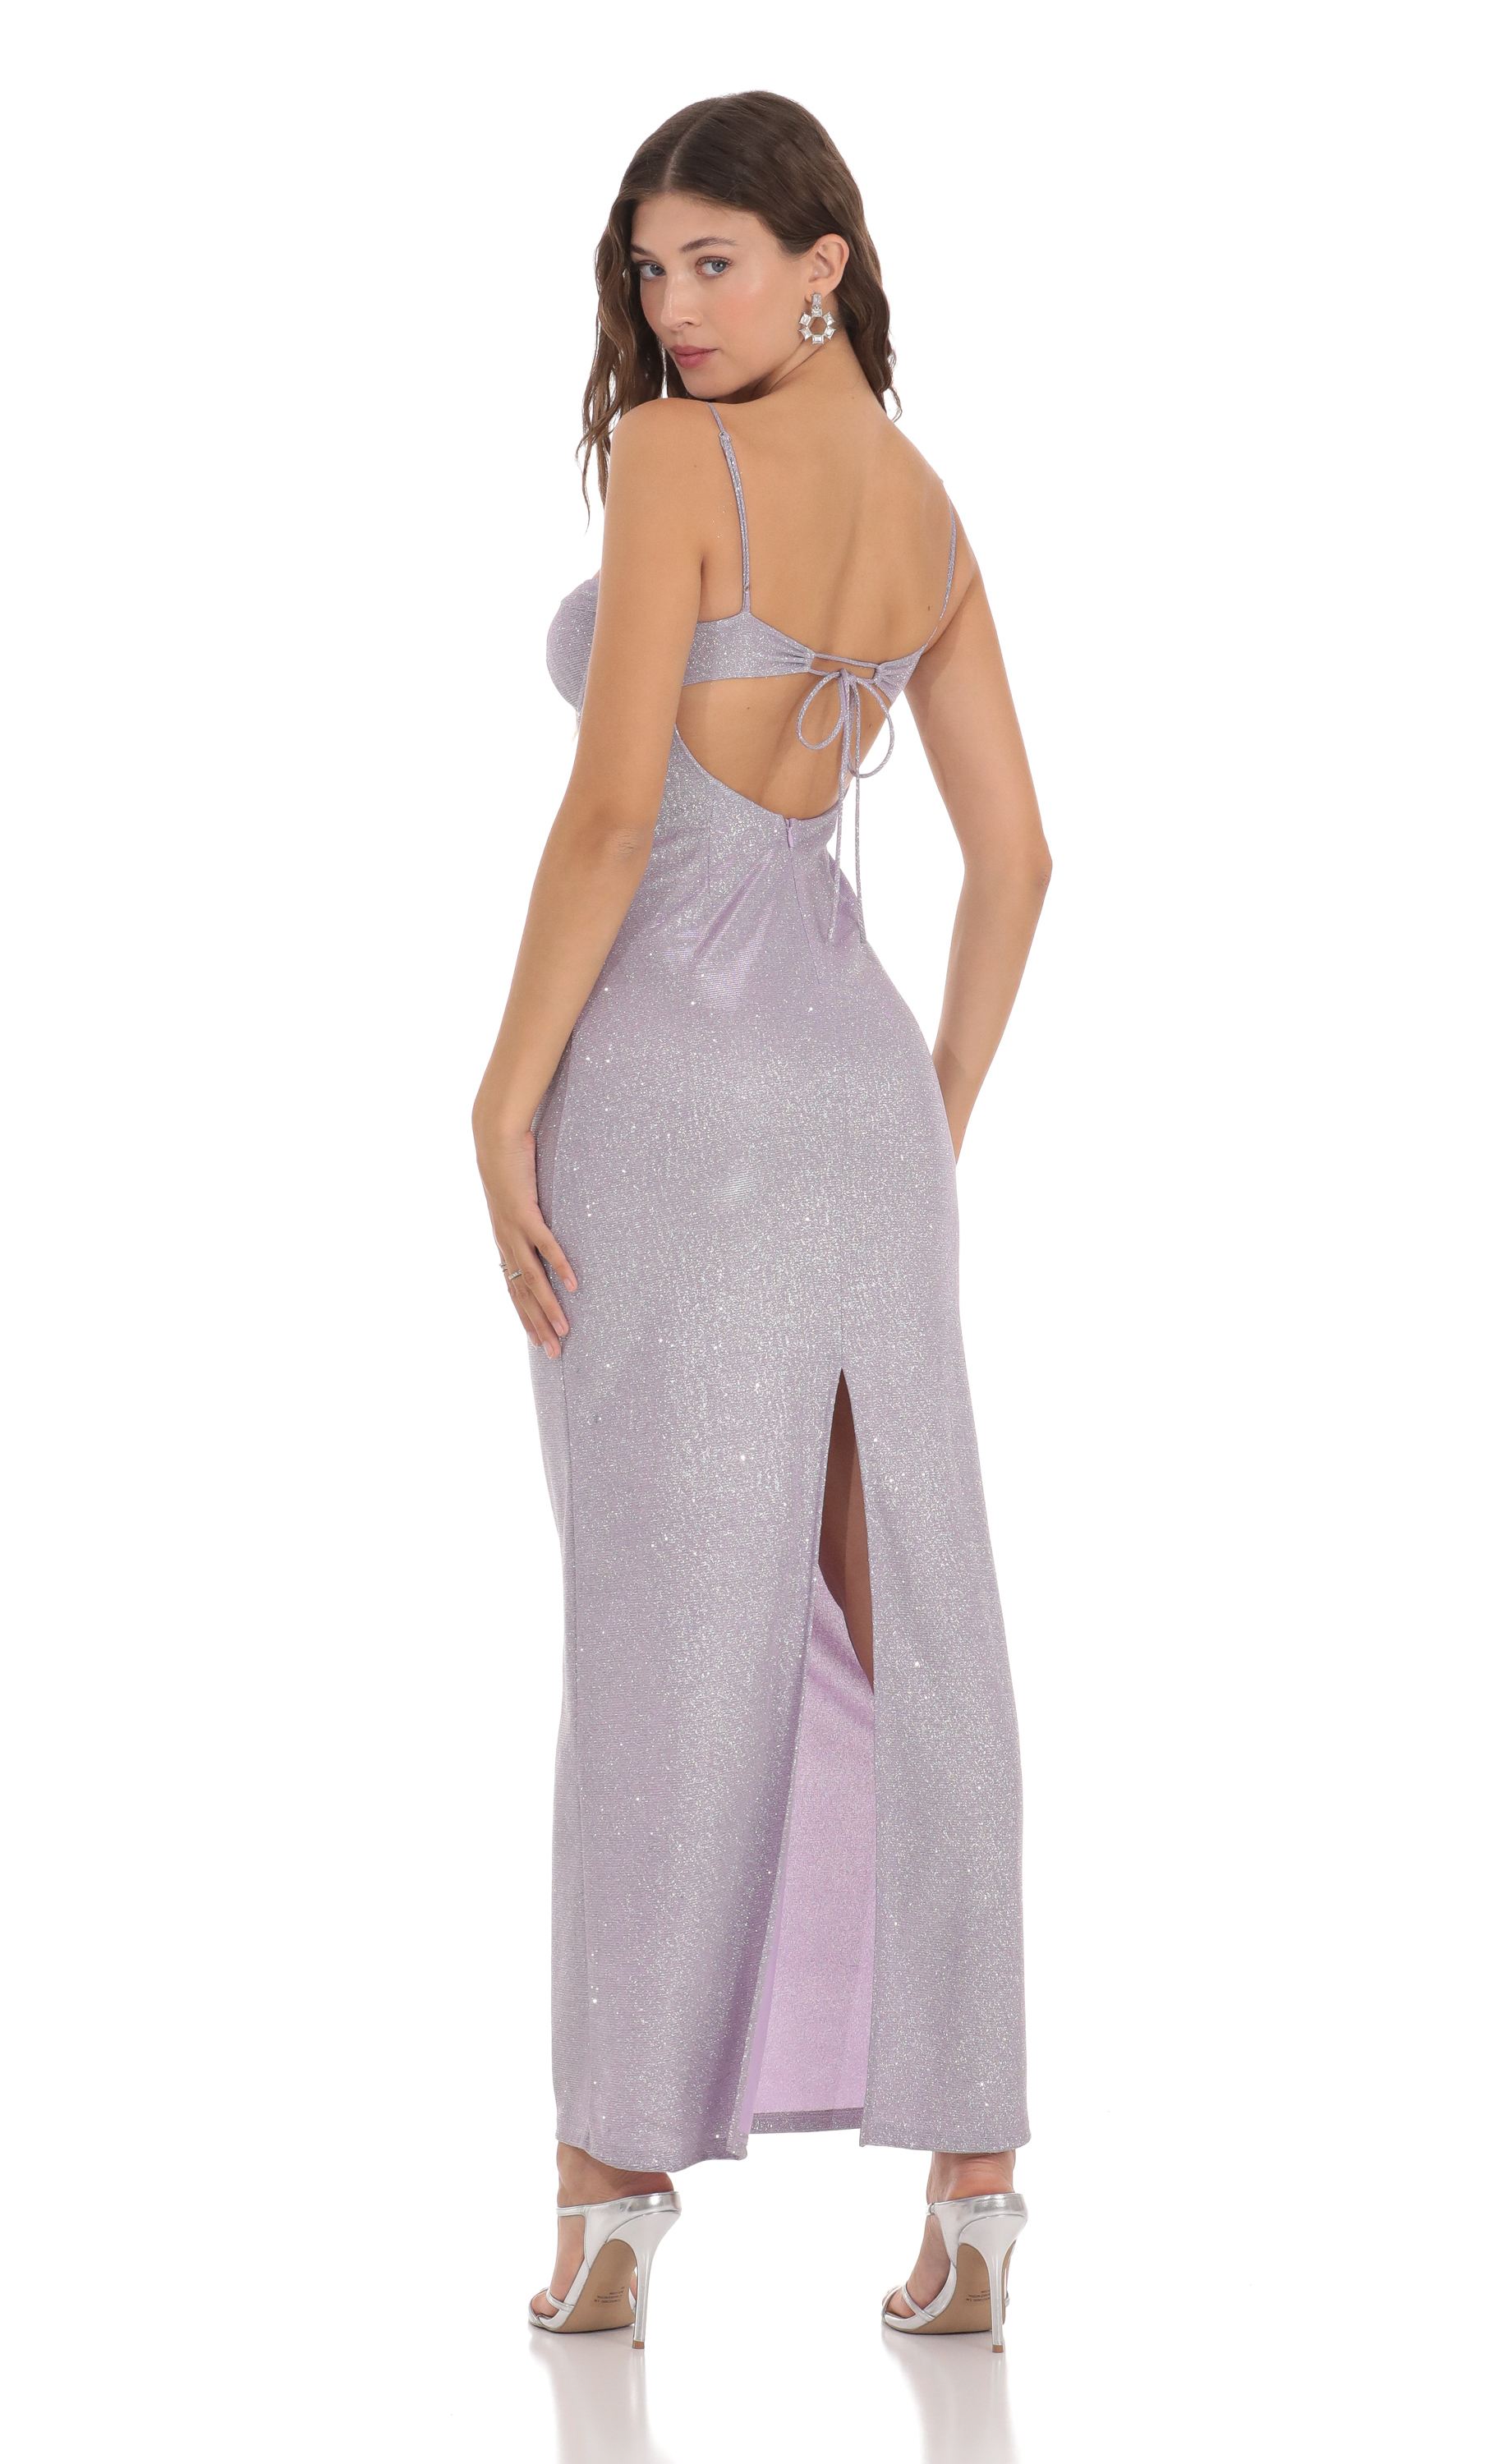 Shimmer Back Slit Bodycon Dress in Lavender